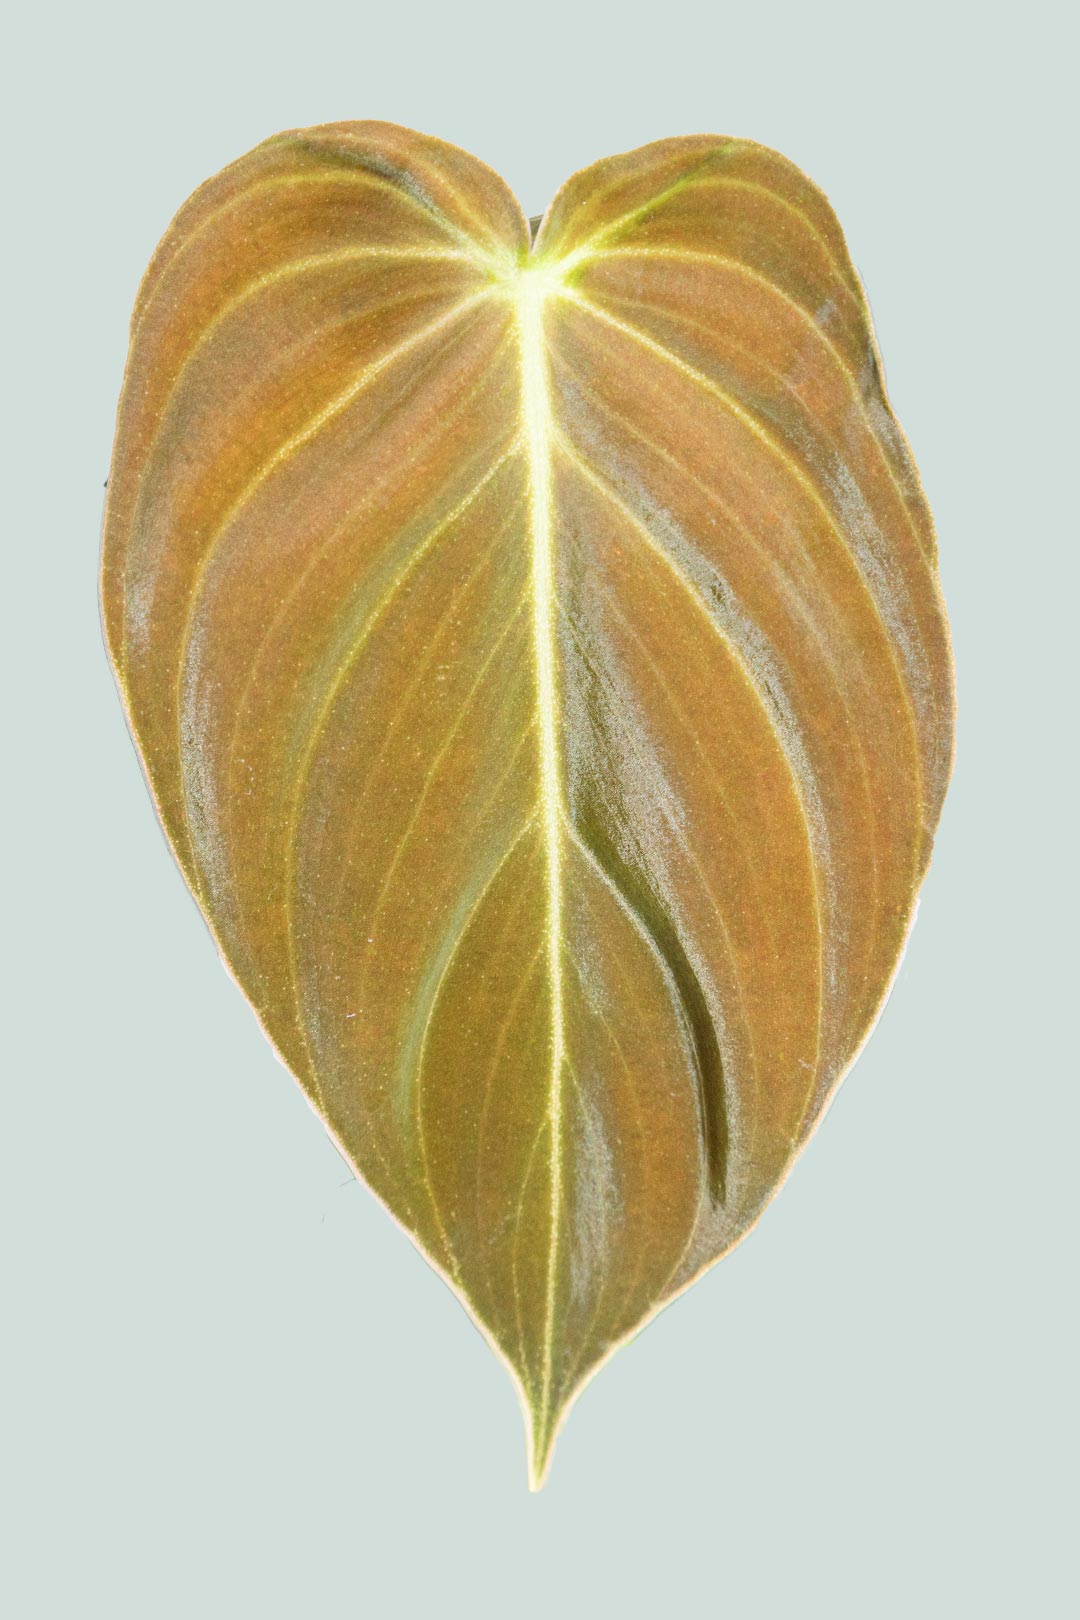 Black Gold - Philodendron melanochrysum - 1L / 14cm / Small